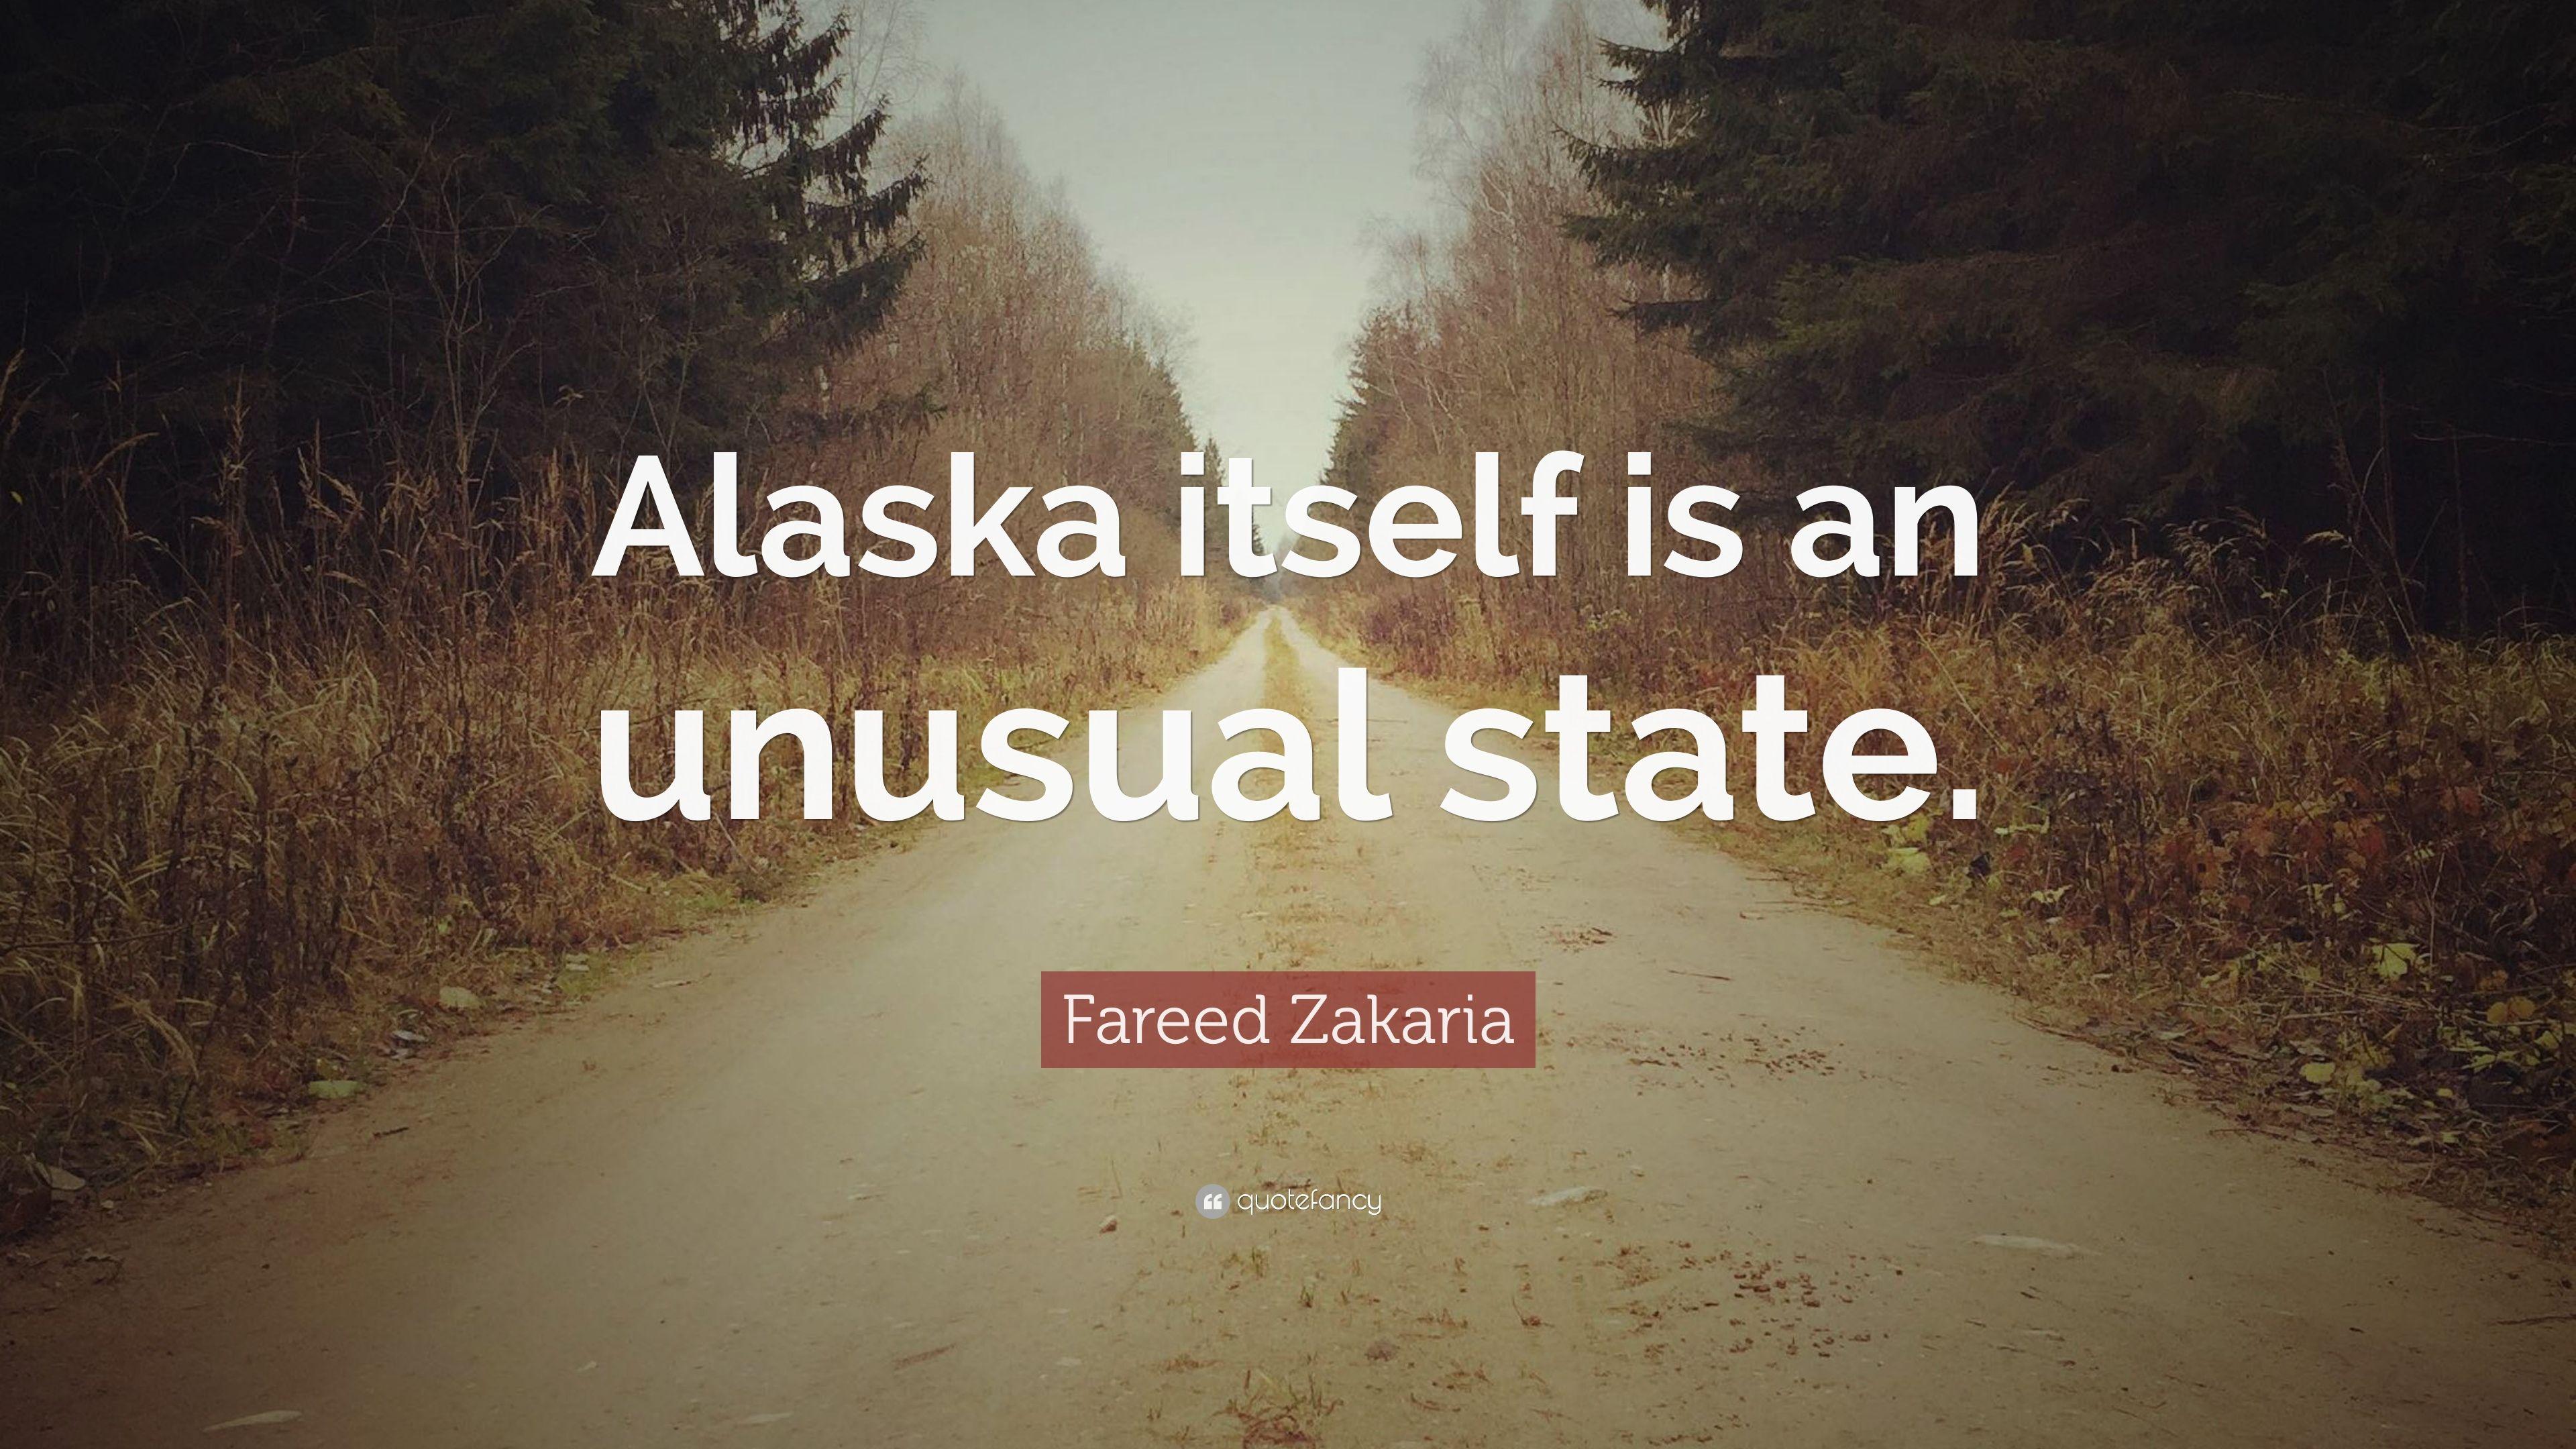 Fareed Zakaria Quote: “Alaska itself is an unusual state.” 5